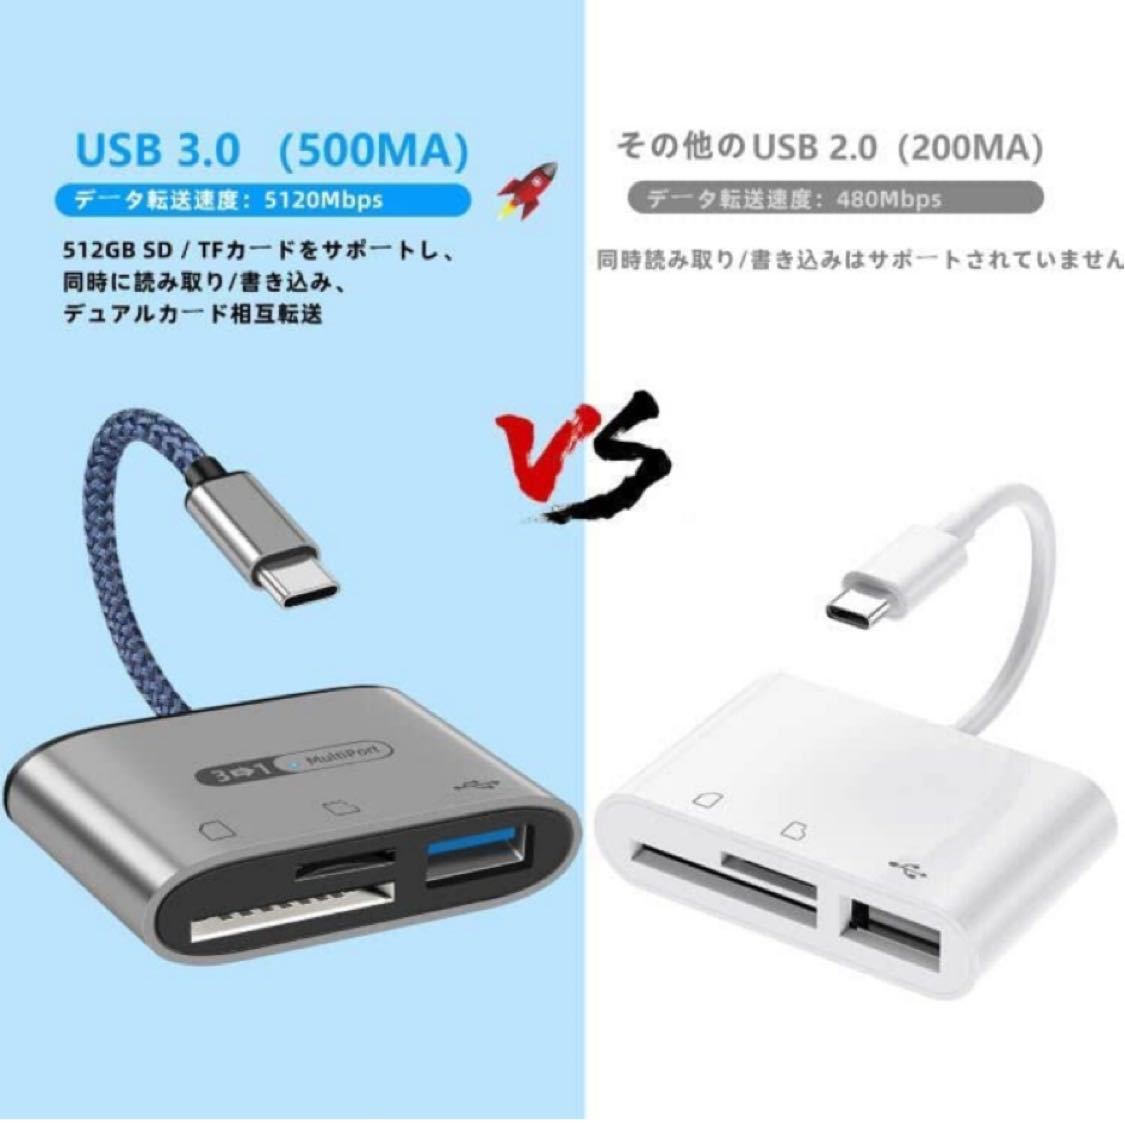 USB Type C SDカードリーダー3 in 1 USB 3.0カメラアダプタ 双方向5Gbps高速データ転送 SD / TFメモリーカードUSB OTG変換アダプタ(3in1)